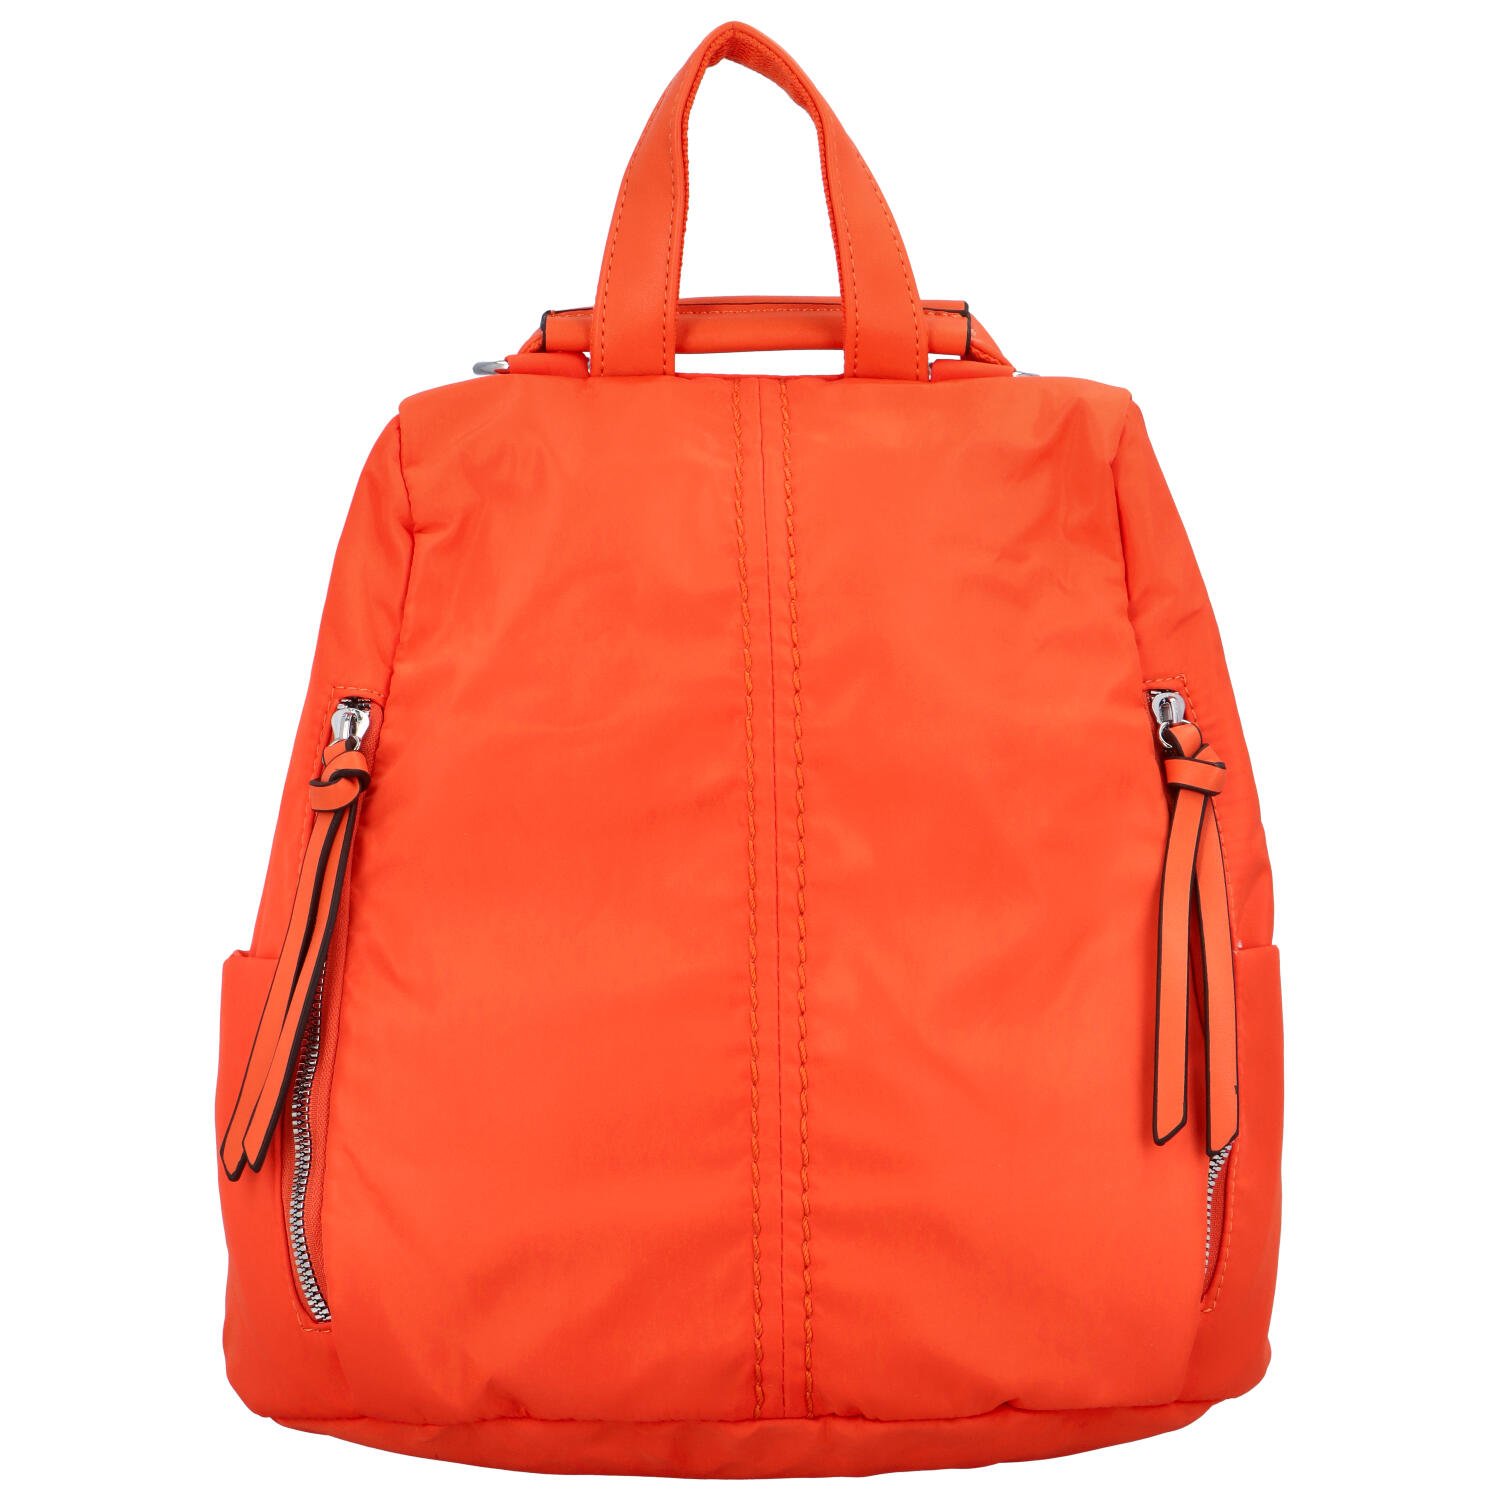 Dámsky látkový batoh kabelka oranžový - Paolo Bags Myrtha